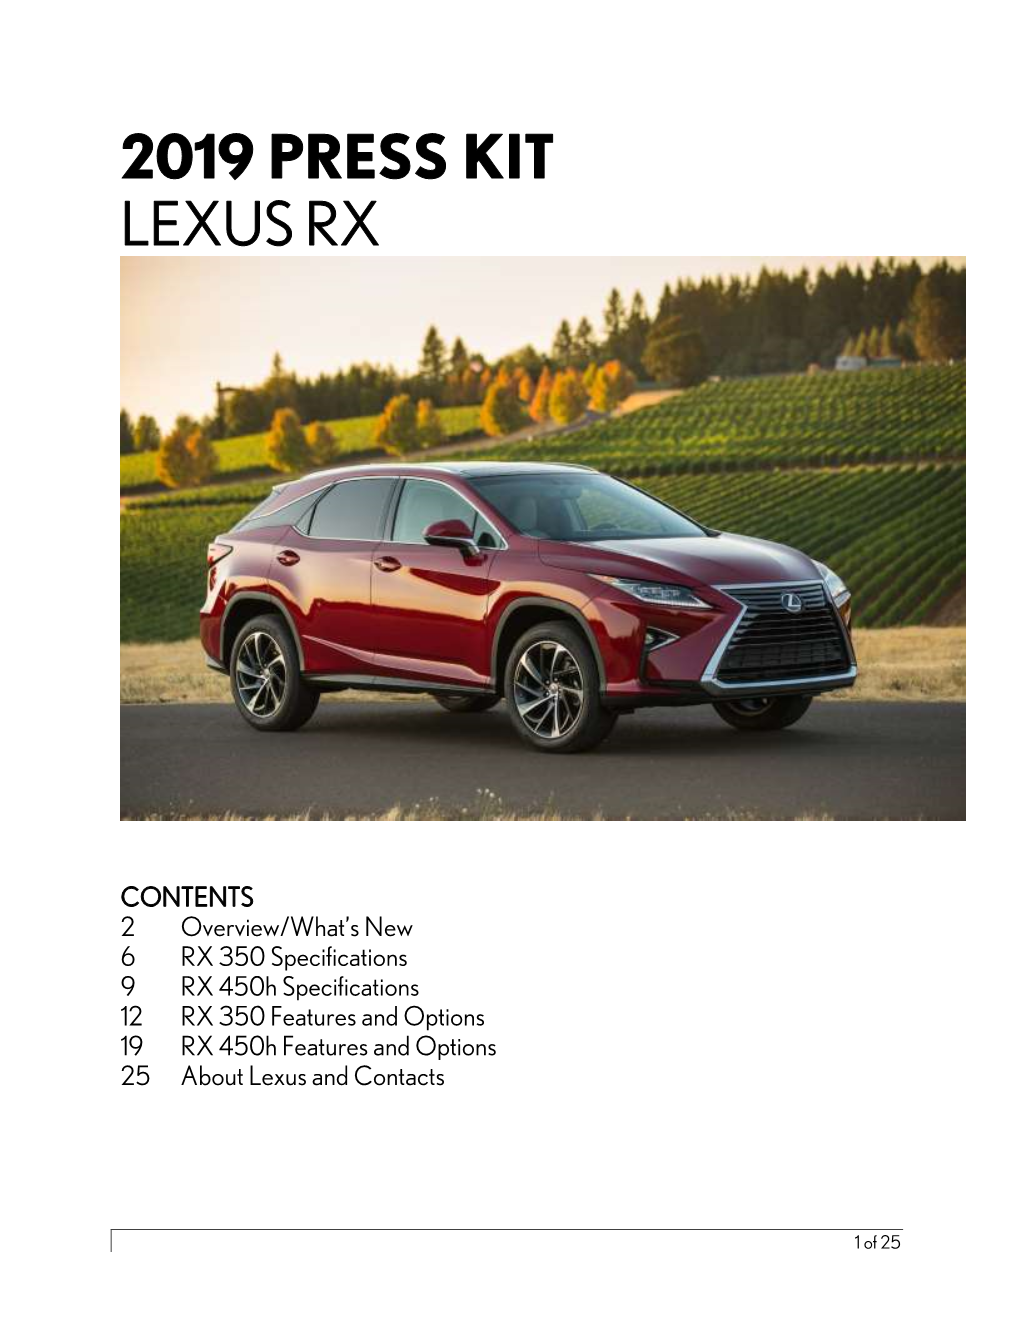 2019 Press Kit Lexus Rx